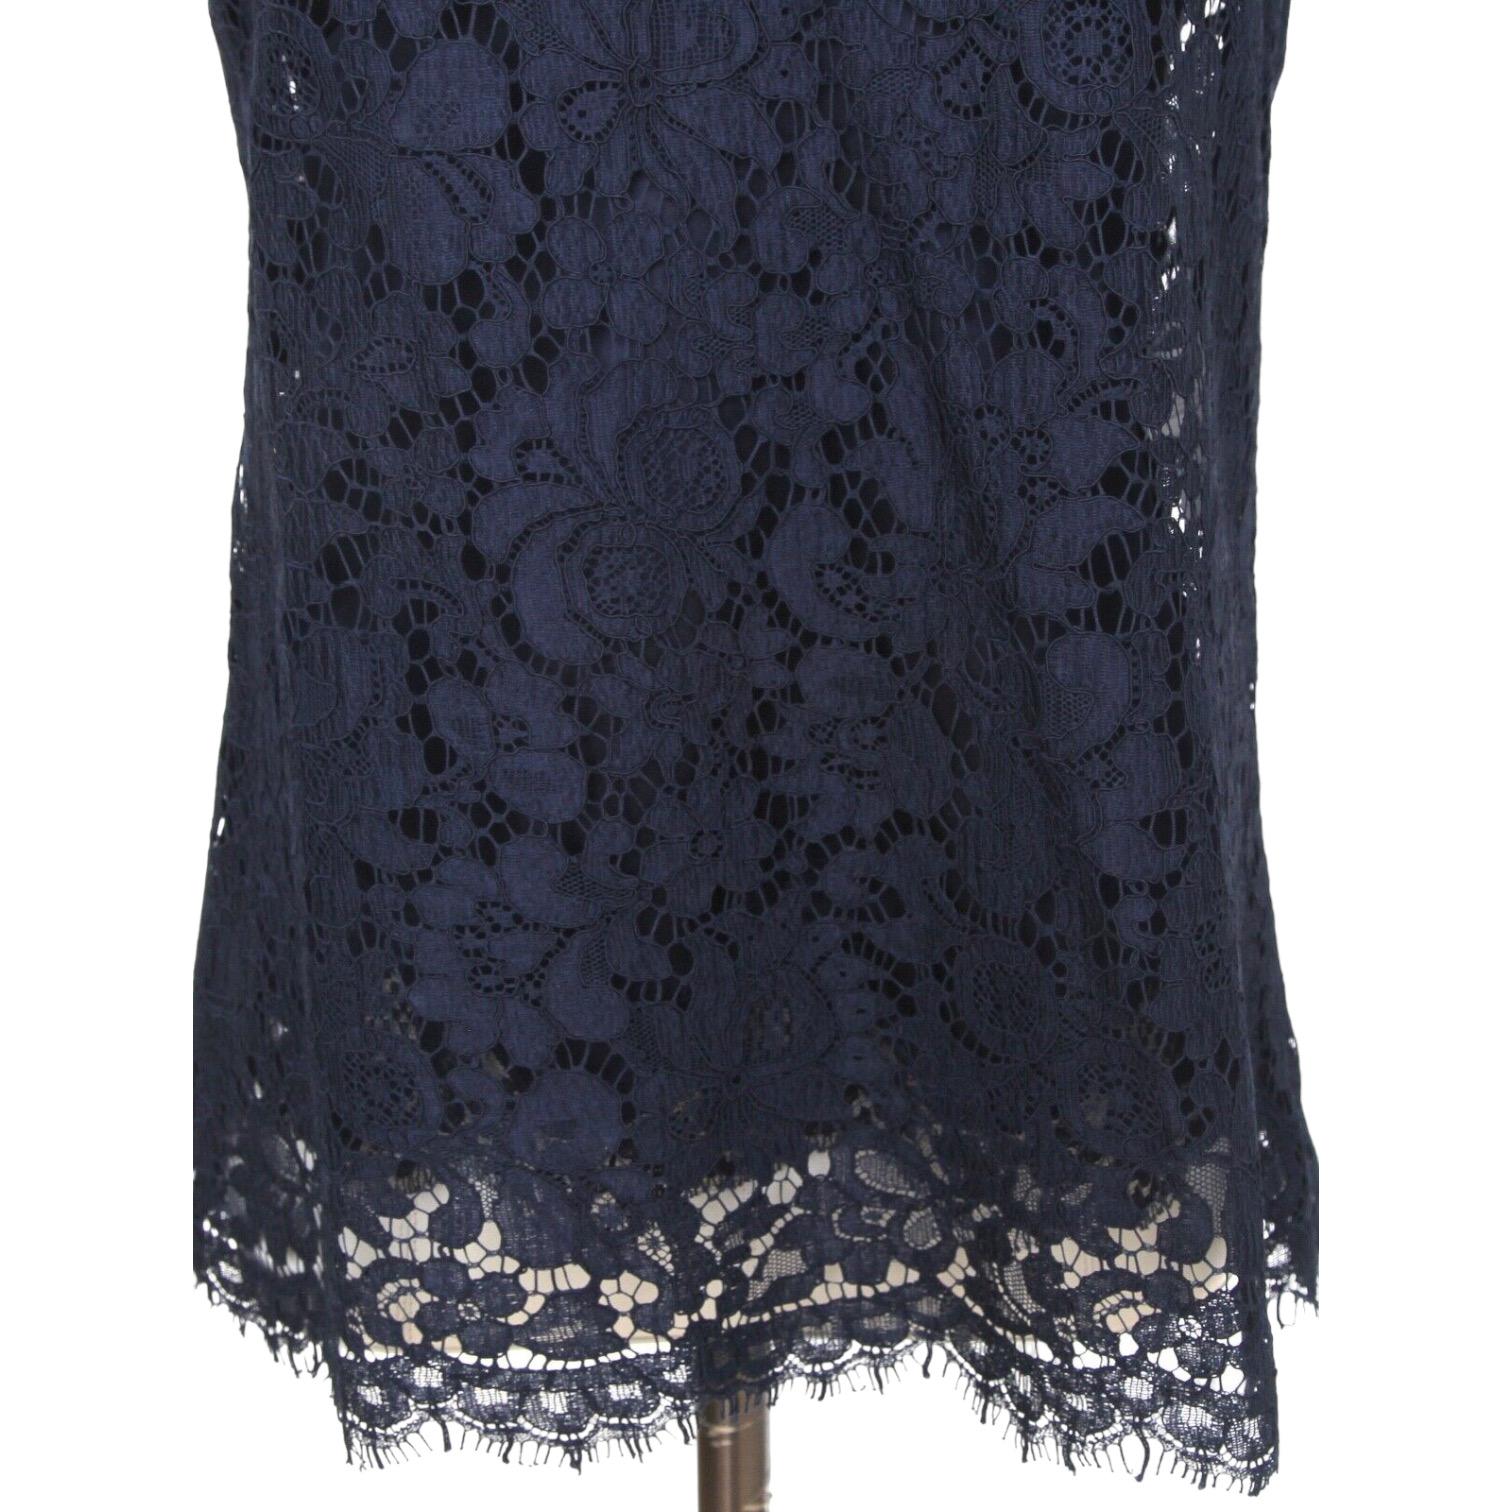 DOLCE & GABBANA Blouse Shirt Top Navy Blue Black Sleeveless Lace Sz 40 Ret $1495 For Sale 4